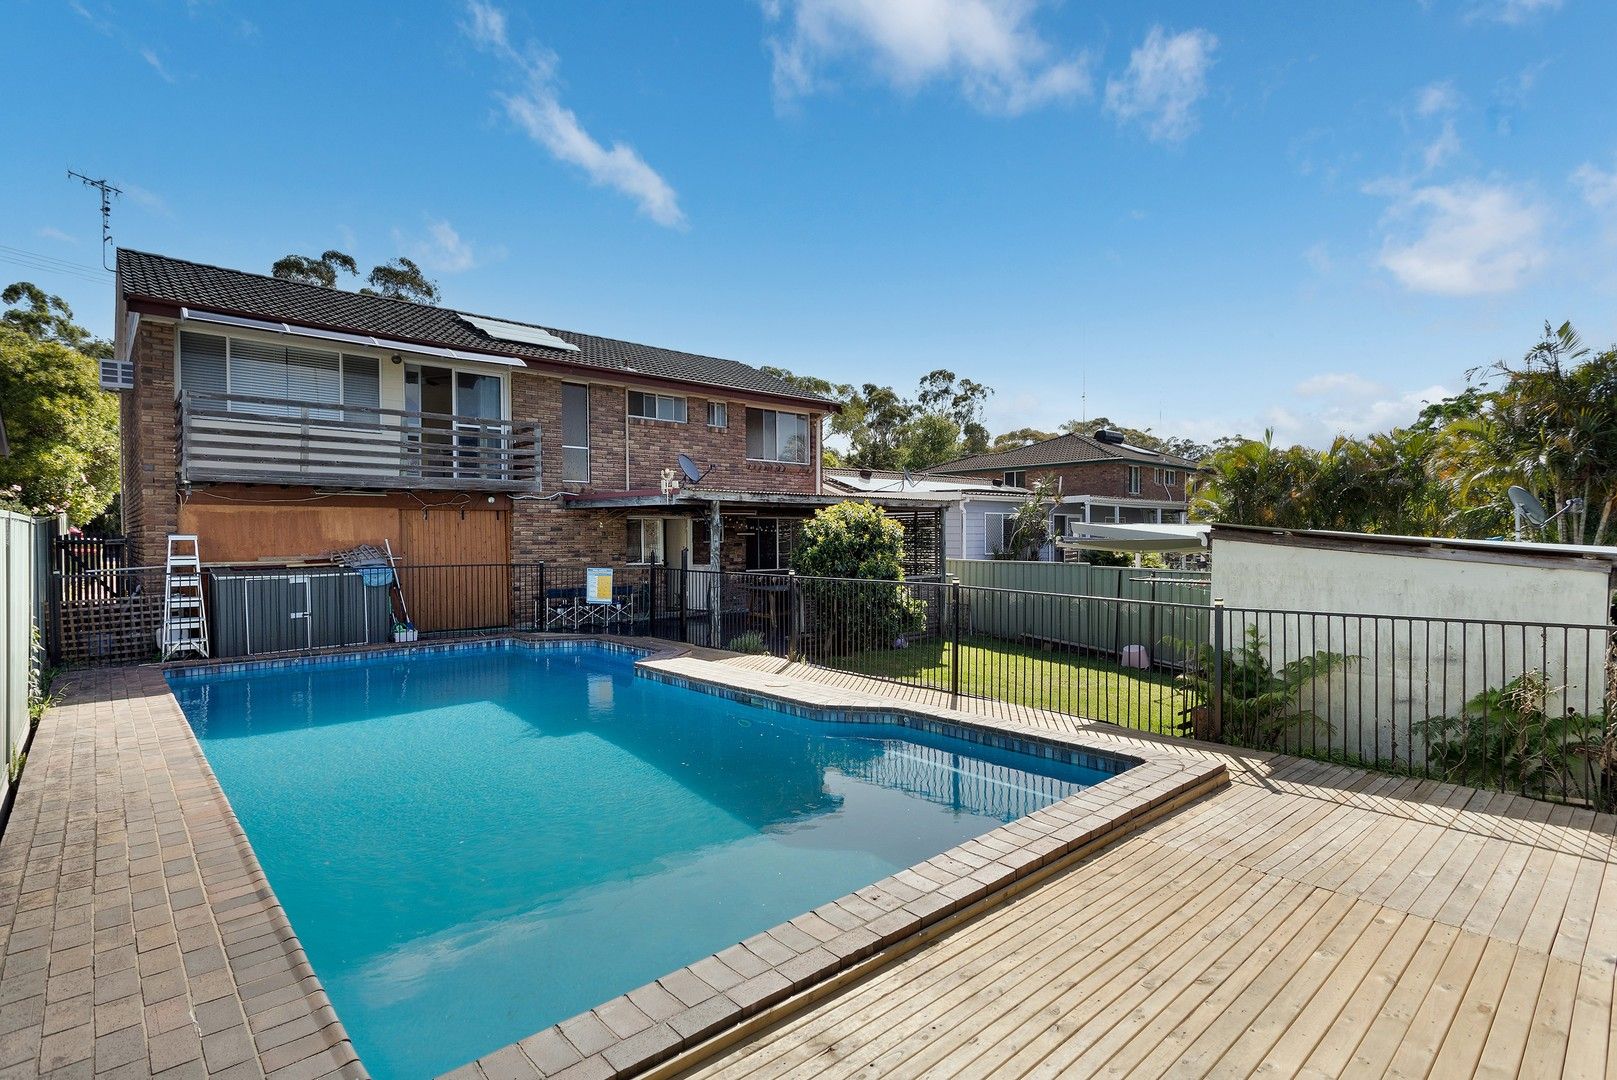 5 bedrooms House in 43 Wyong Road BERKELEY VALE NSW, 2261